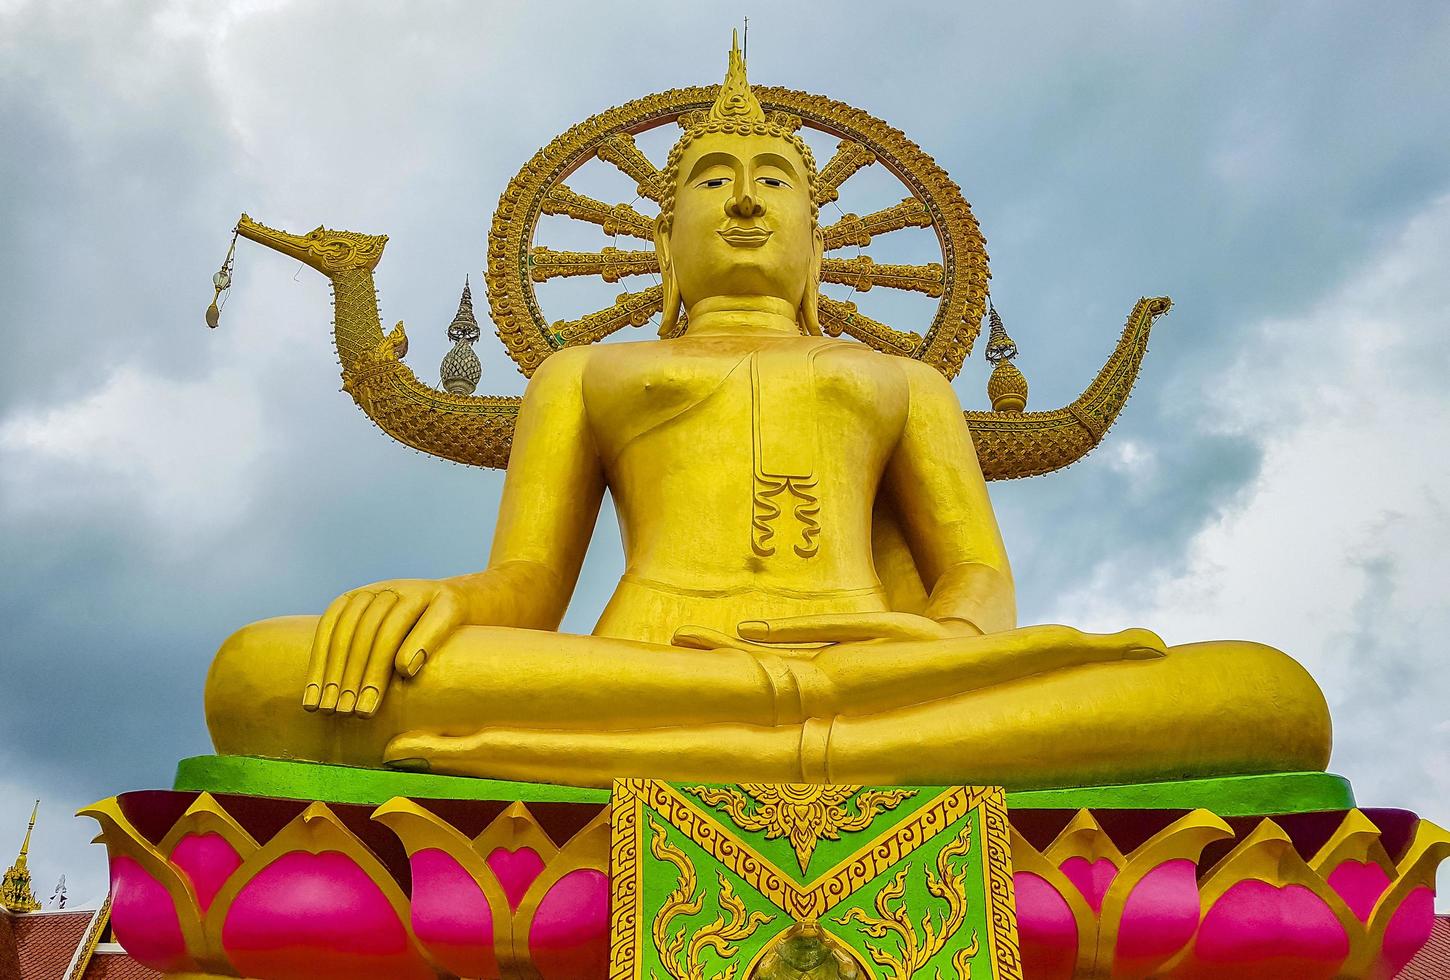 statua dorata del buddha al tempio di wat phra yai, koh samui, thailandia foto